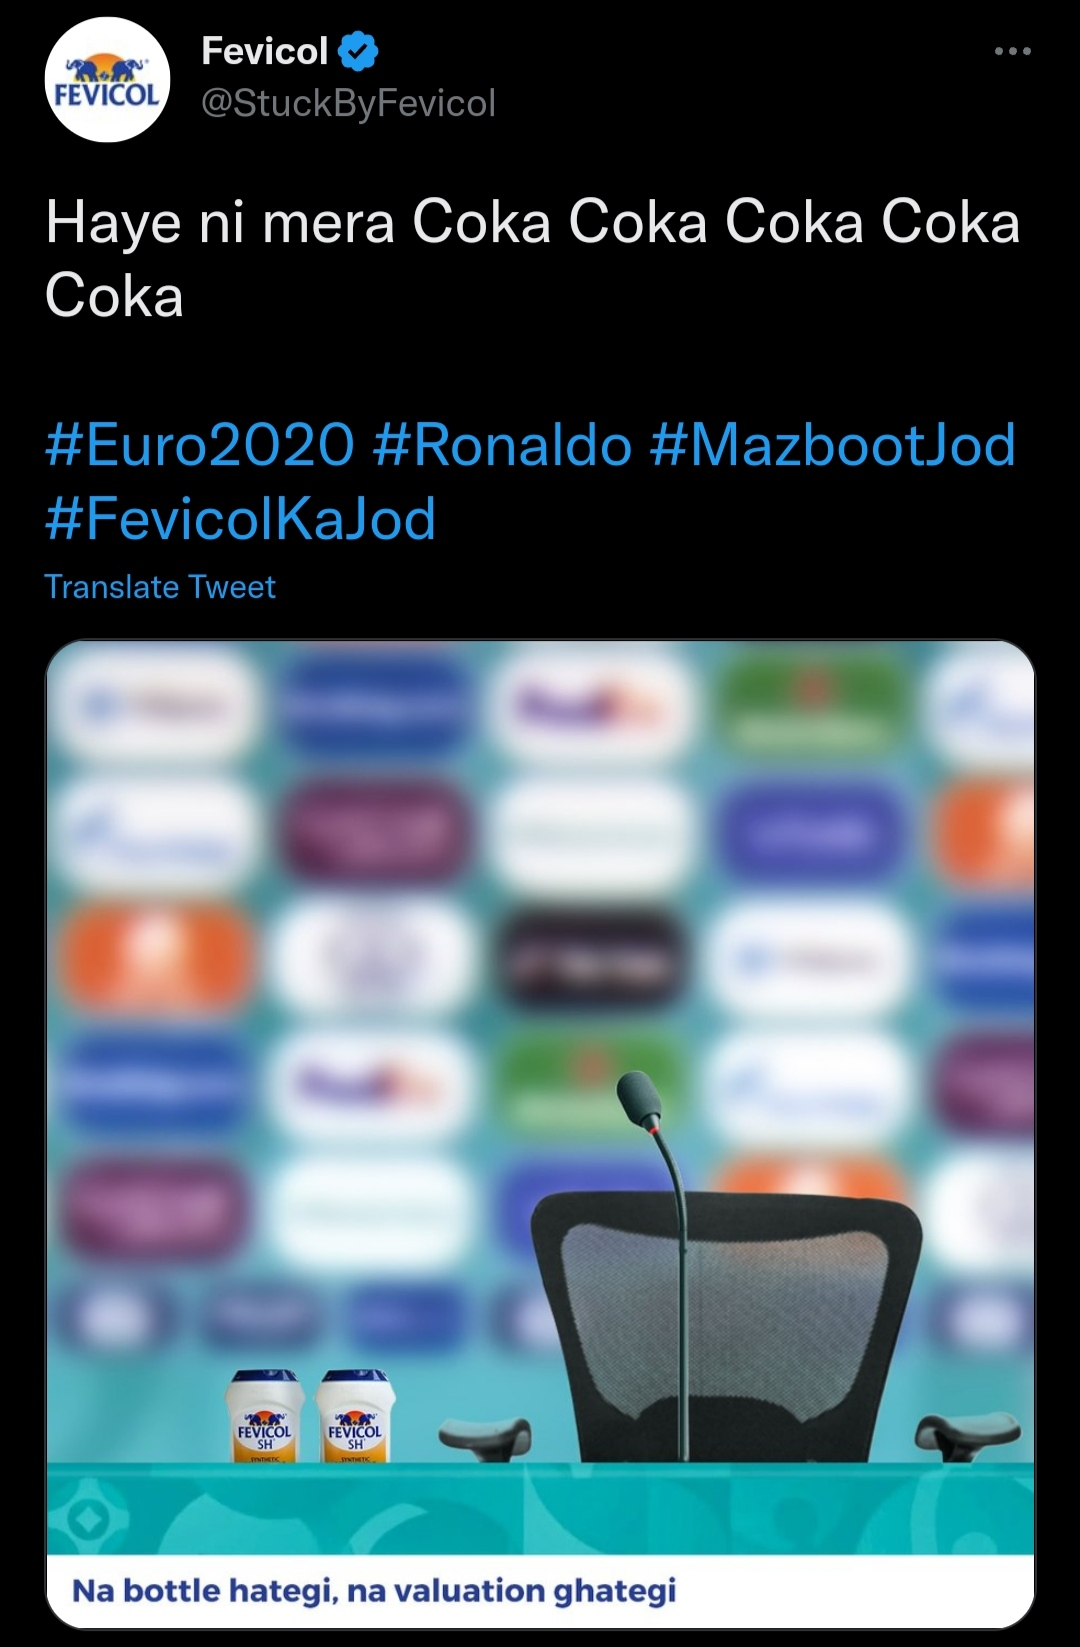 Fevicol's witty tweet amidst the Coca Cola and Cristiano Ronaldo snub